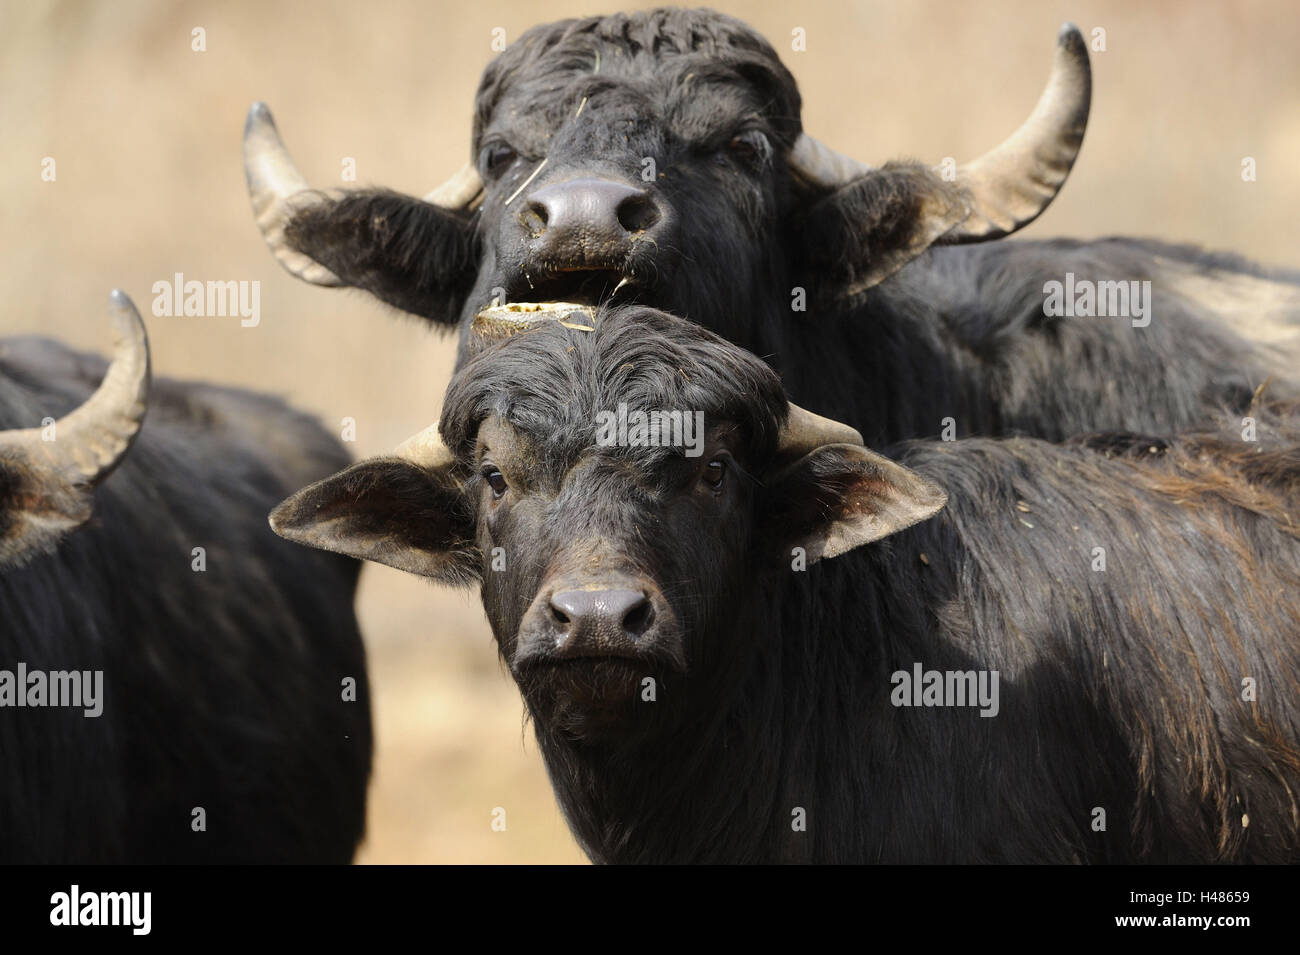 Wild water buffalo, Bubalus arnee, calf, cow, portrait, Stock Photo